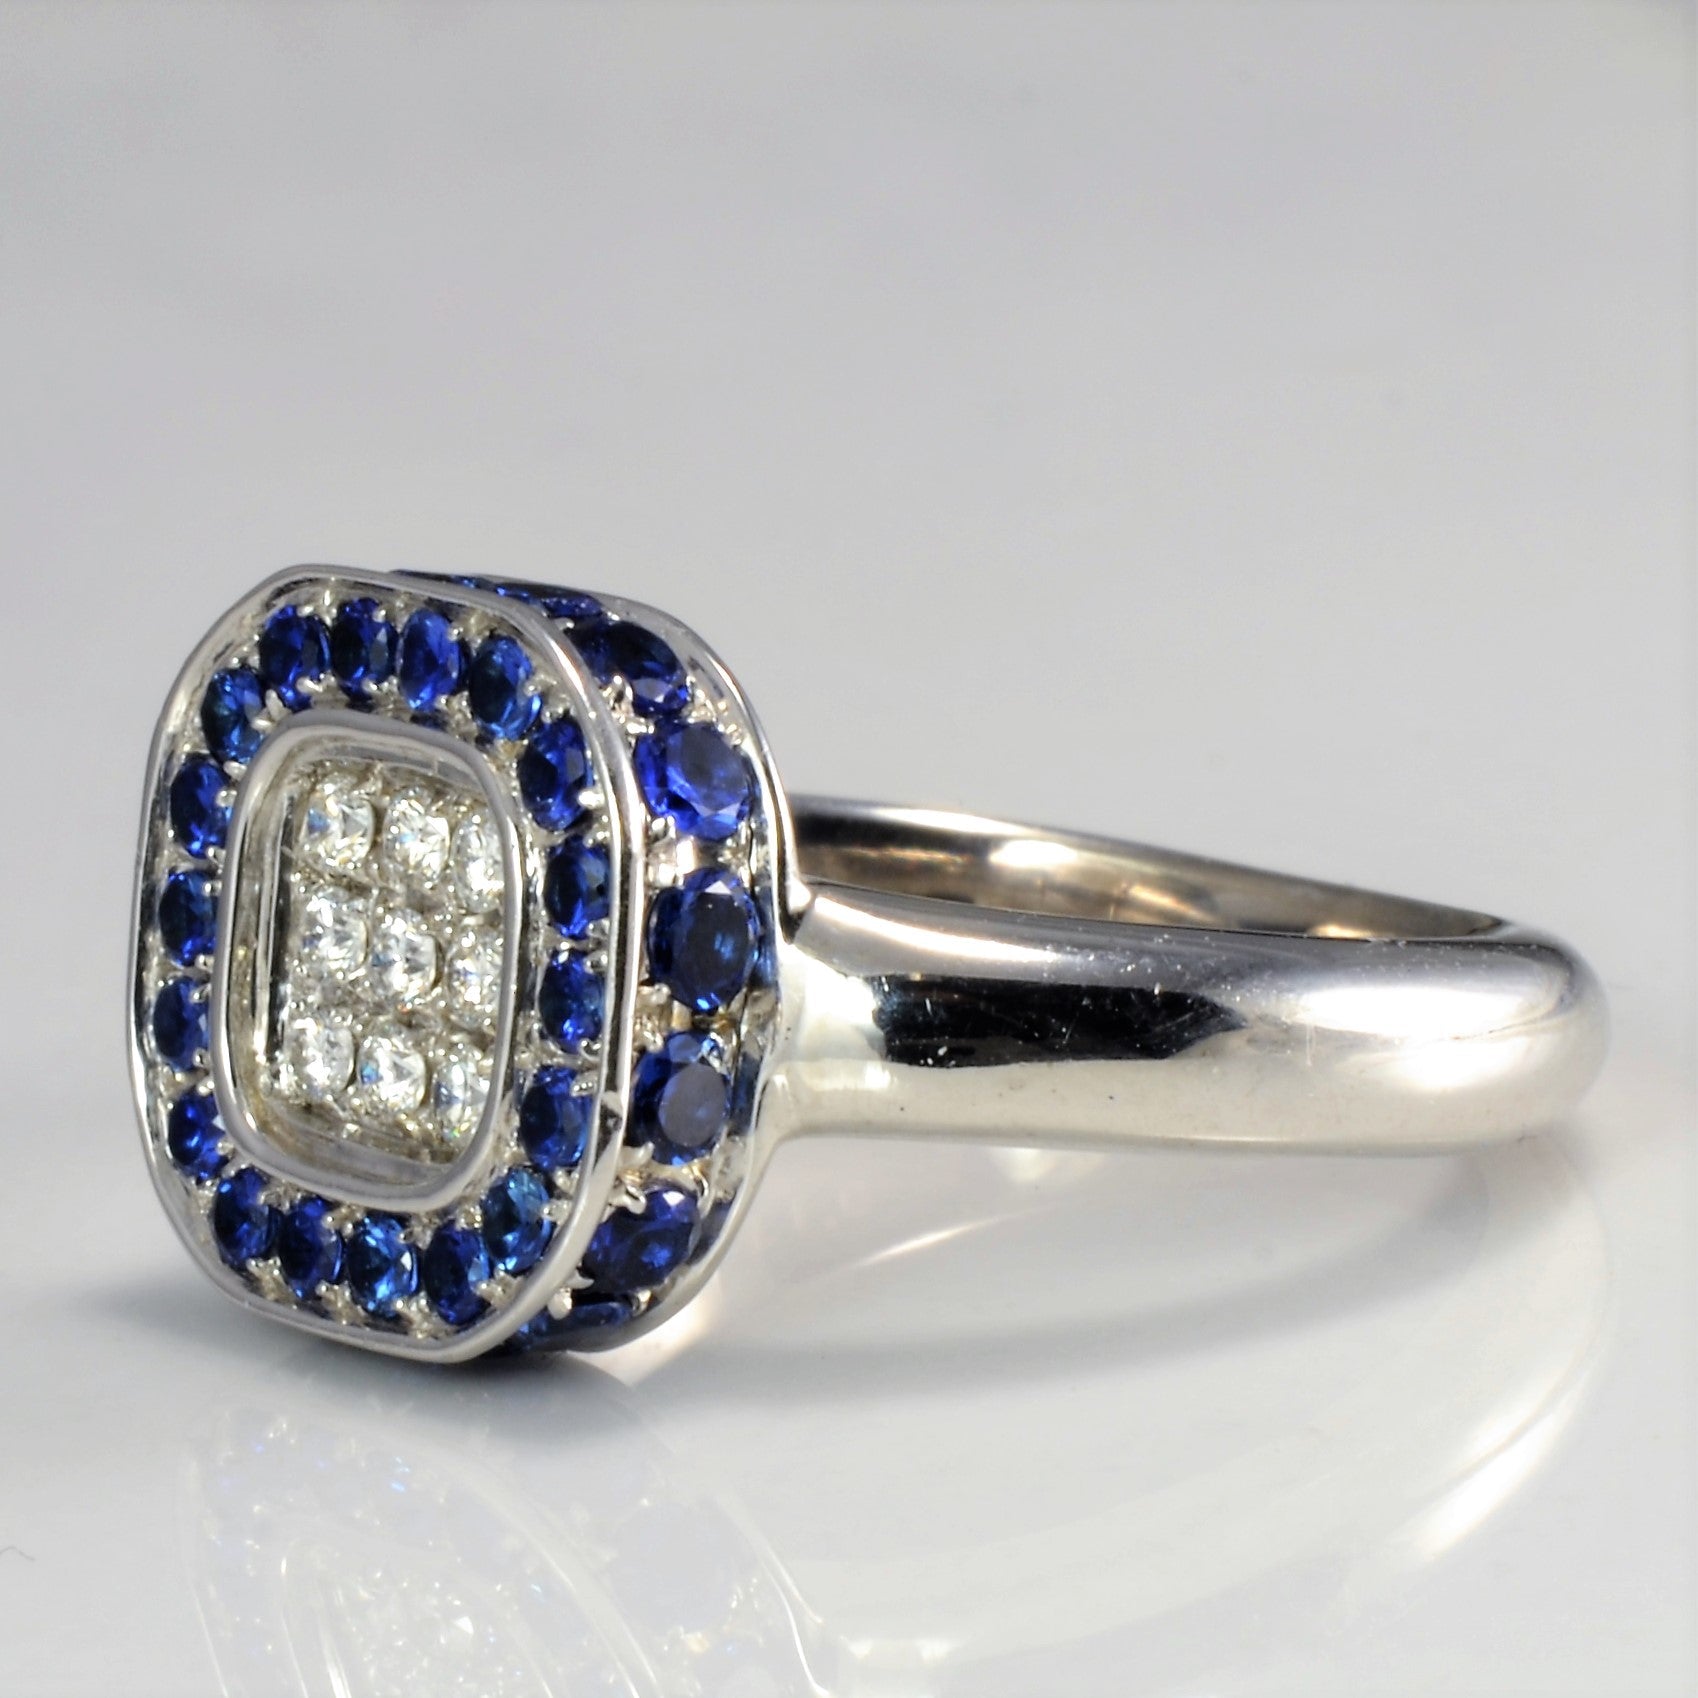 'Birks' Cluster Set Diamond & Sapphire Ring | 0.13 ctw, SZ 5.25 | - 100 Ways